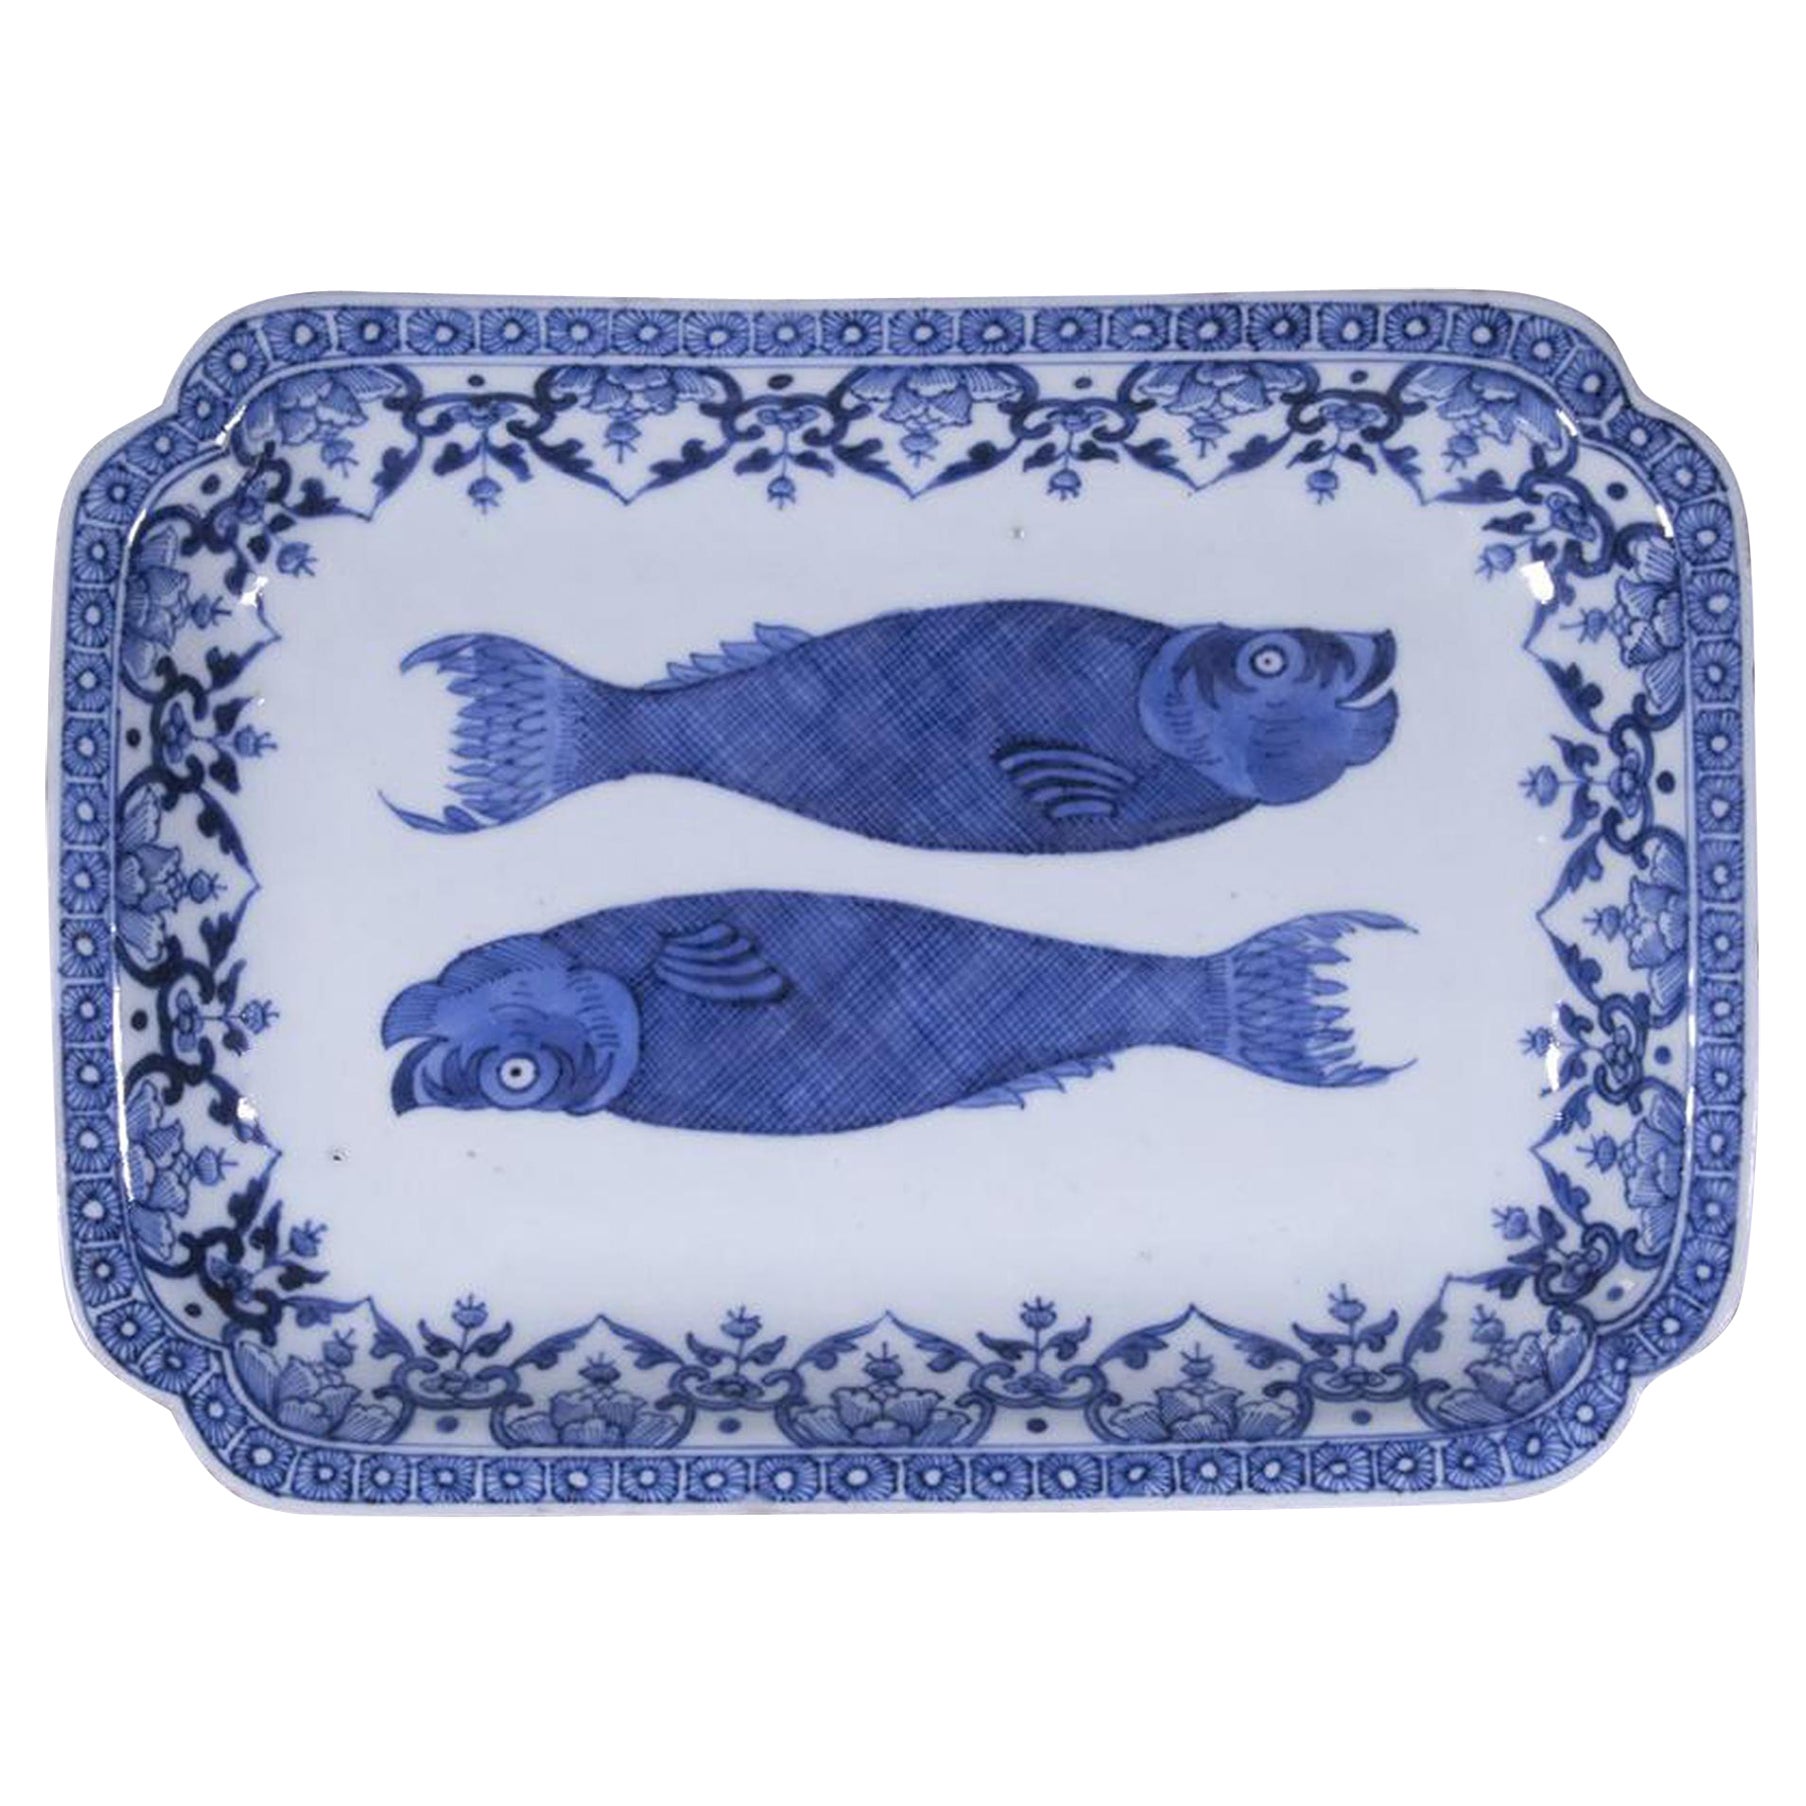 Chinese Export Porcelain Rare Dutch-Market Blue & White Herring Dish